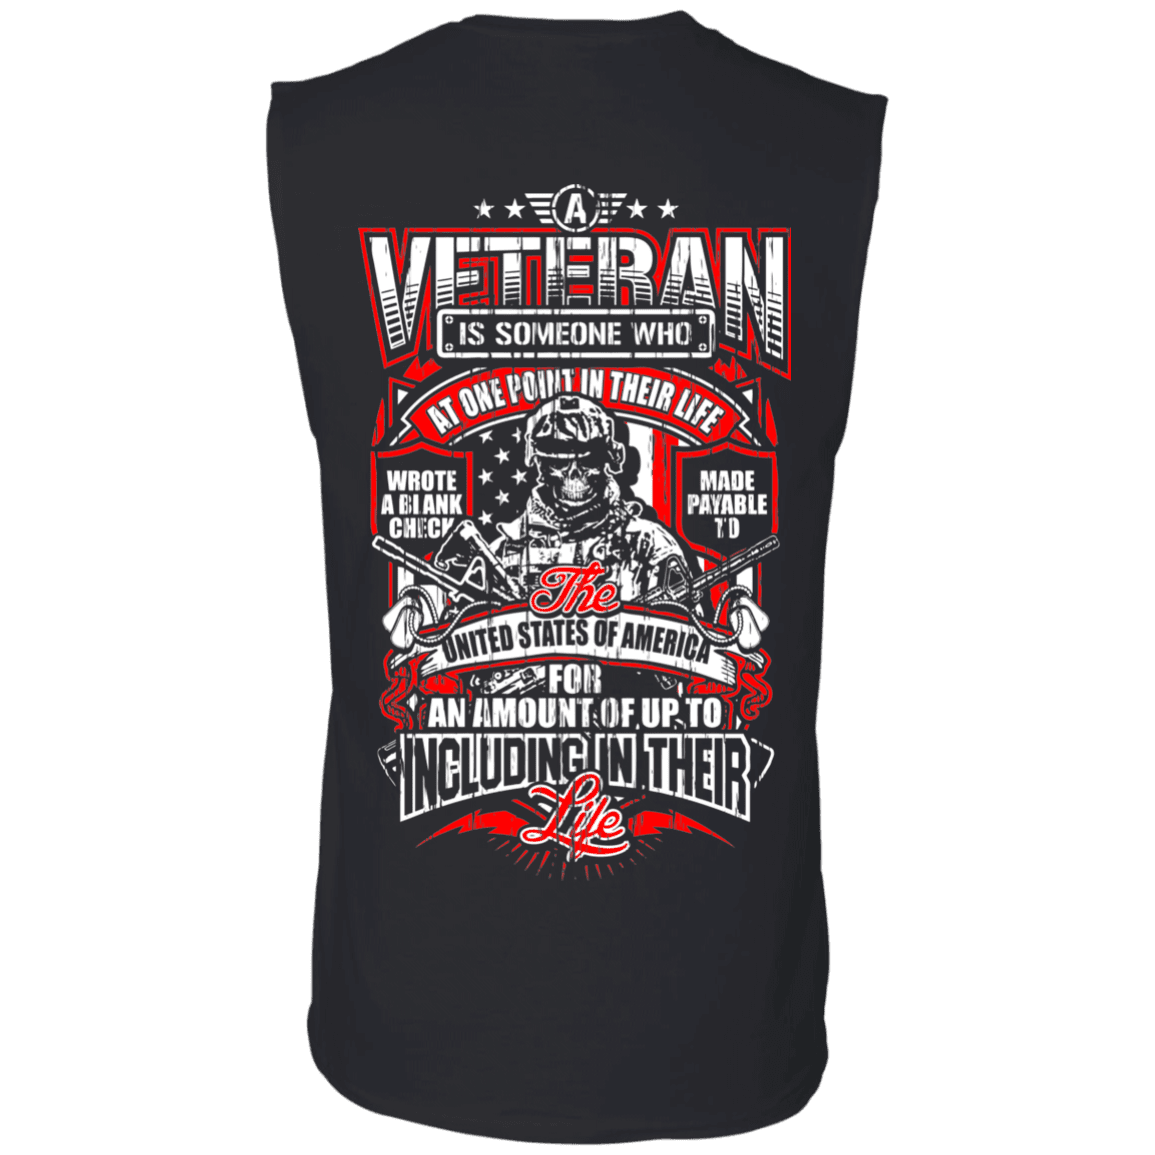 Military T-Shirt "A Veteran" Men Back-TShirt-General-Veterans Nation